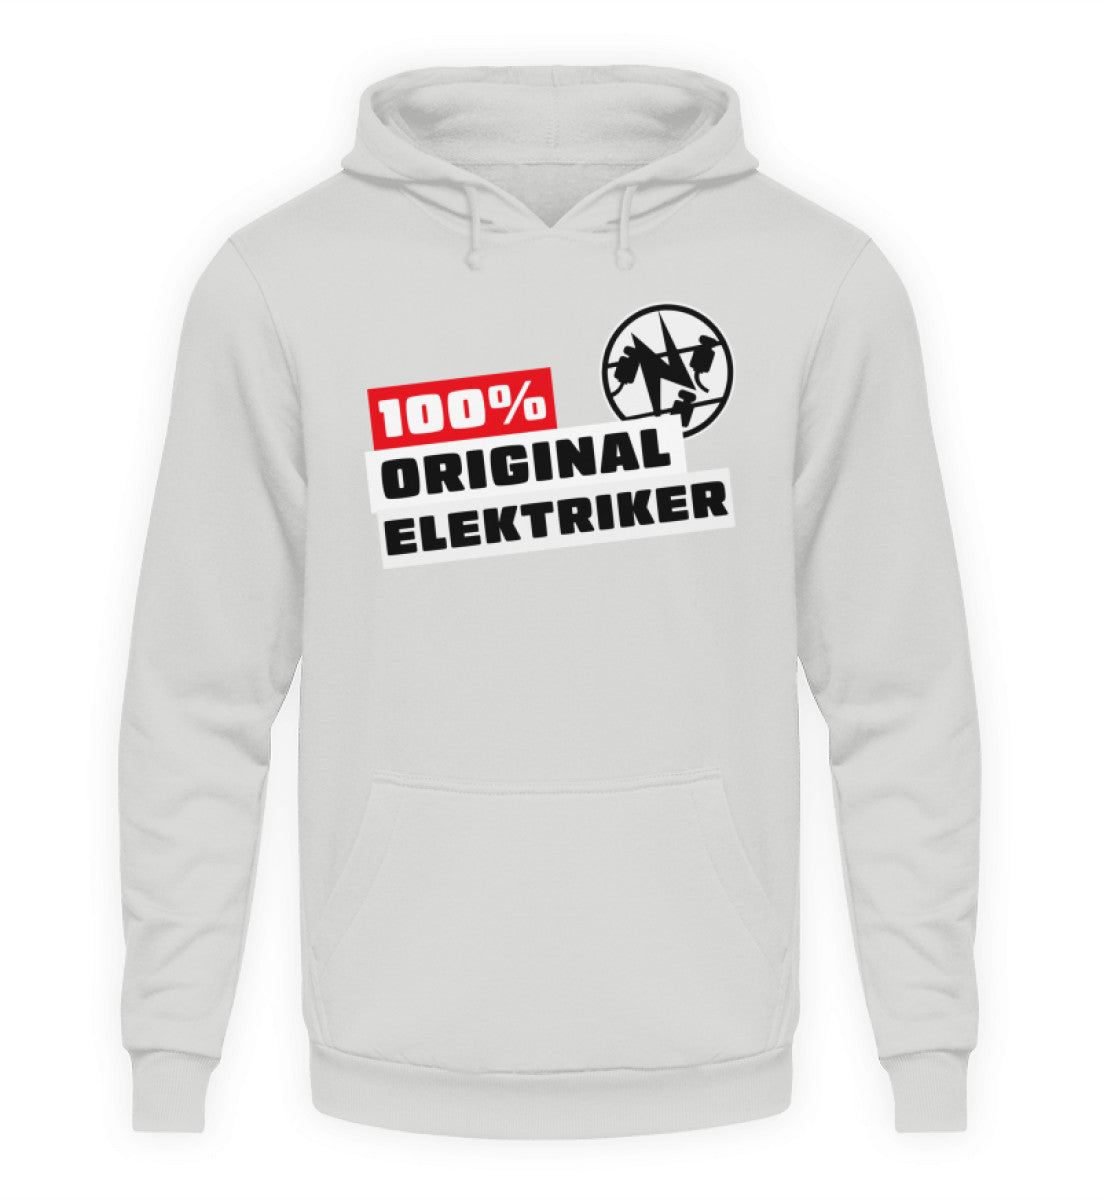 100 % Elektriker - Handwerker Hoodie - Handwerkerfashion